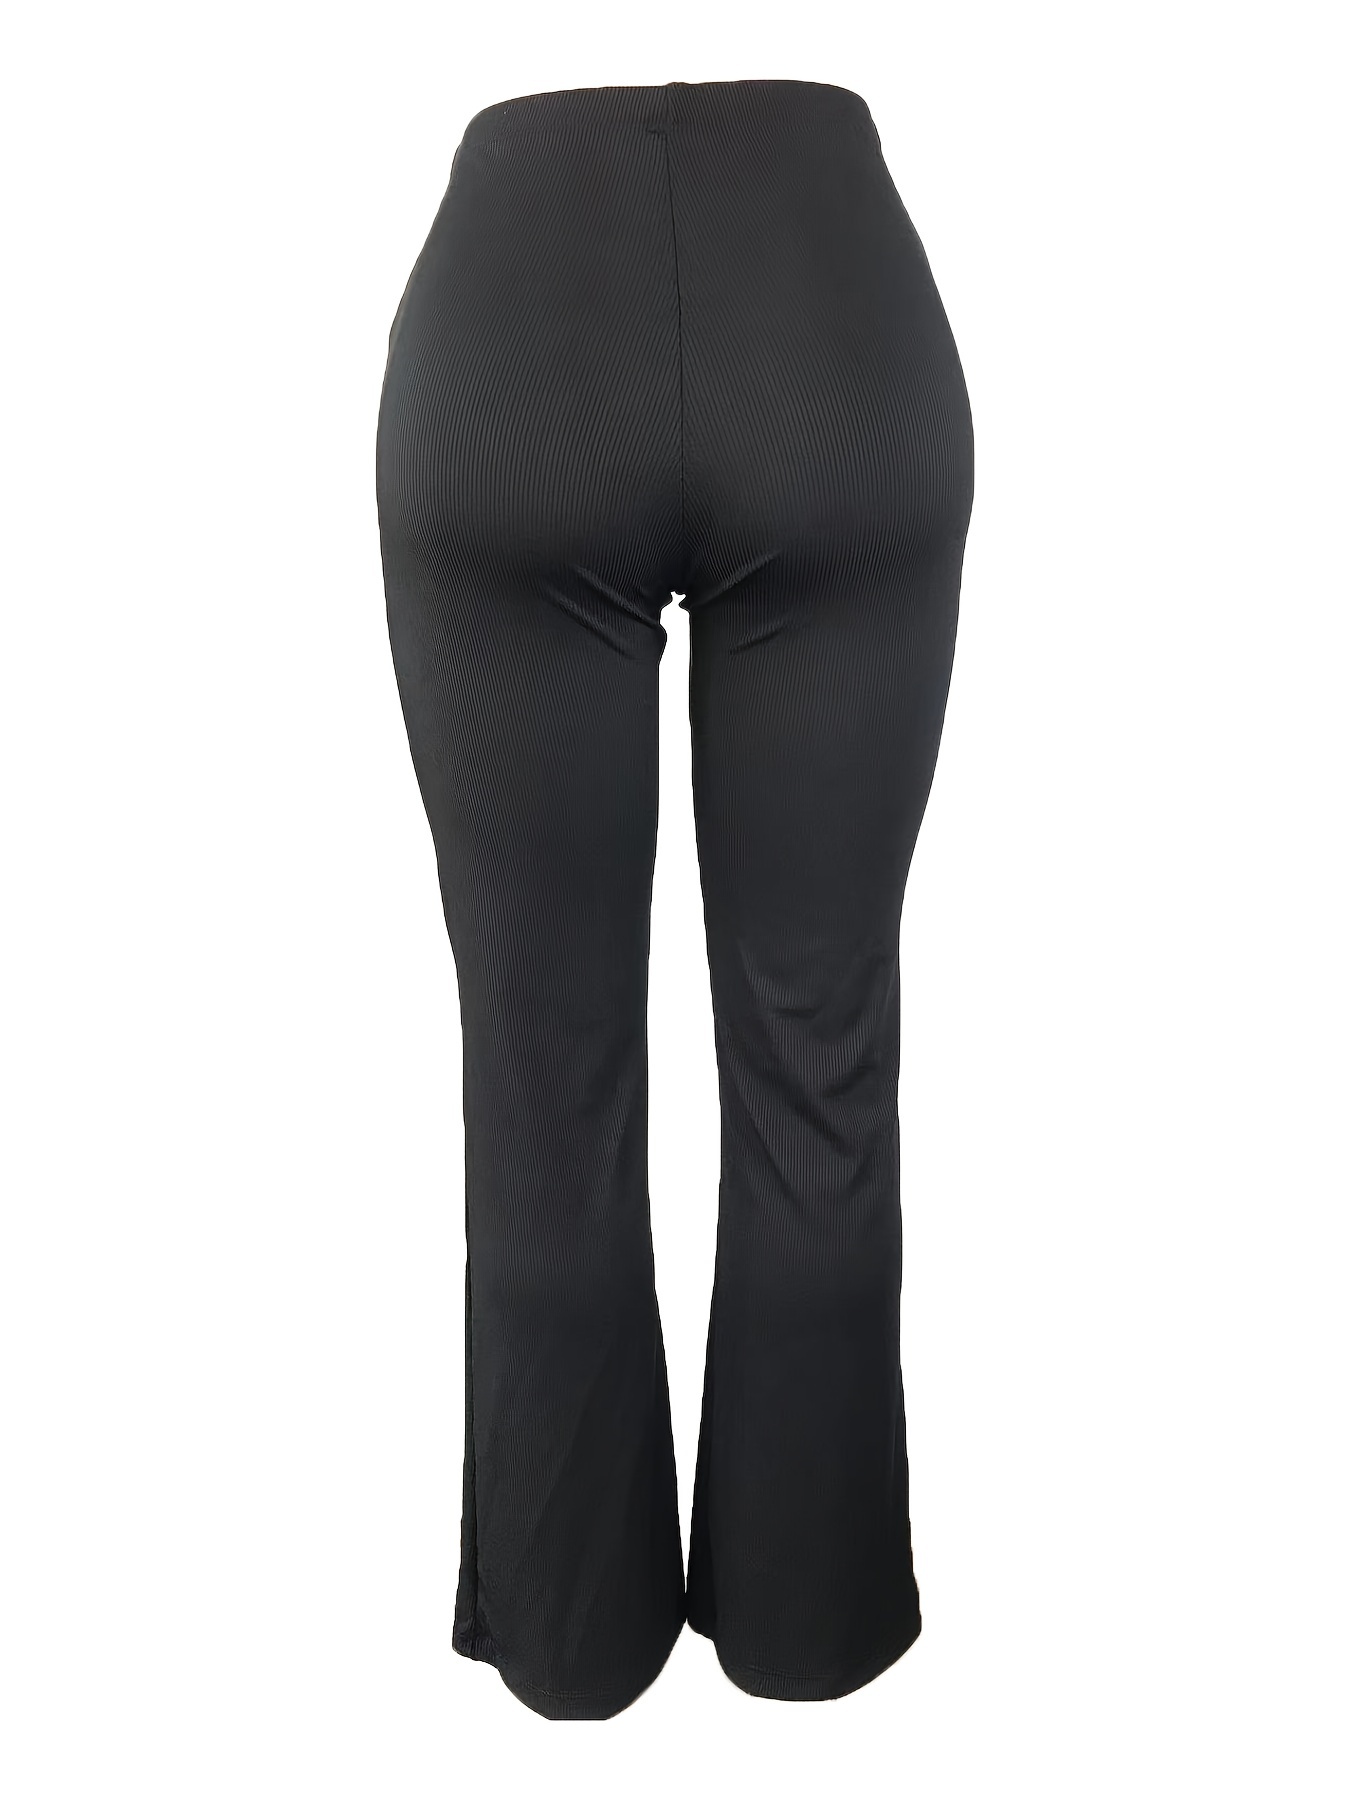 Handyulong Yoga Pants Women's Stretch Workout Relax Fit Super Soft Cargo  Yoga Pants Wide Leg Palazzo Pants Trousers Pockets Large A00-black